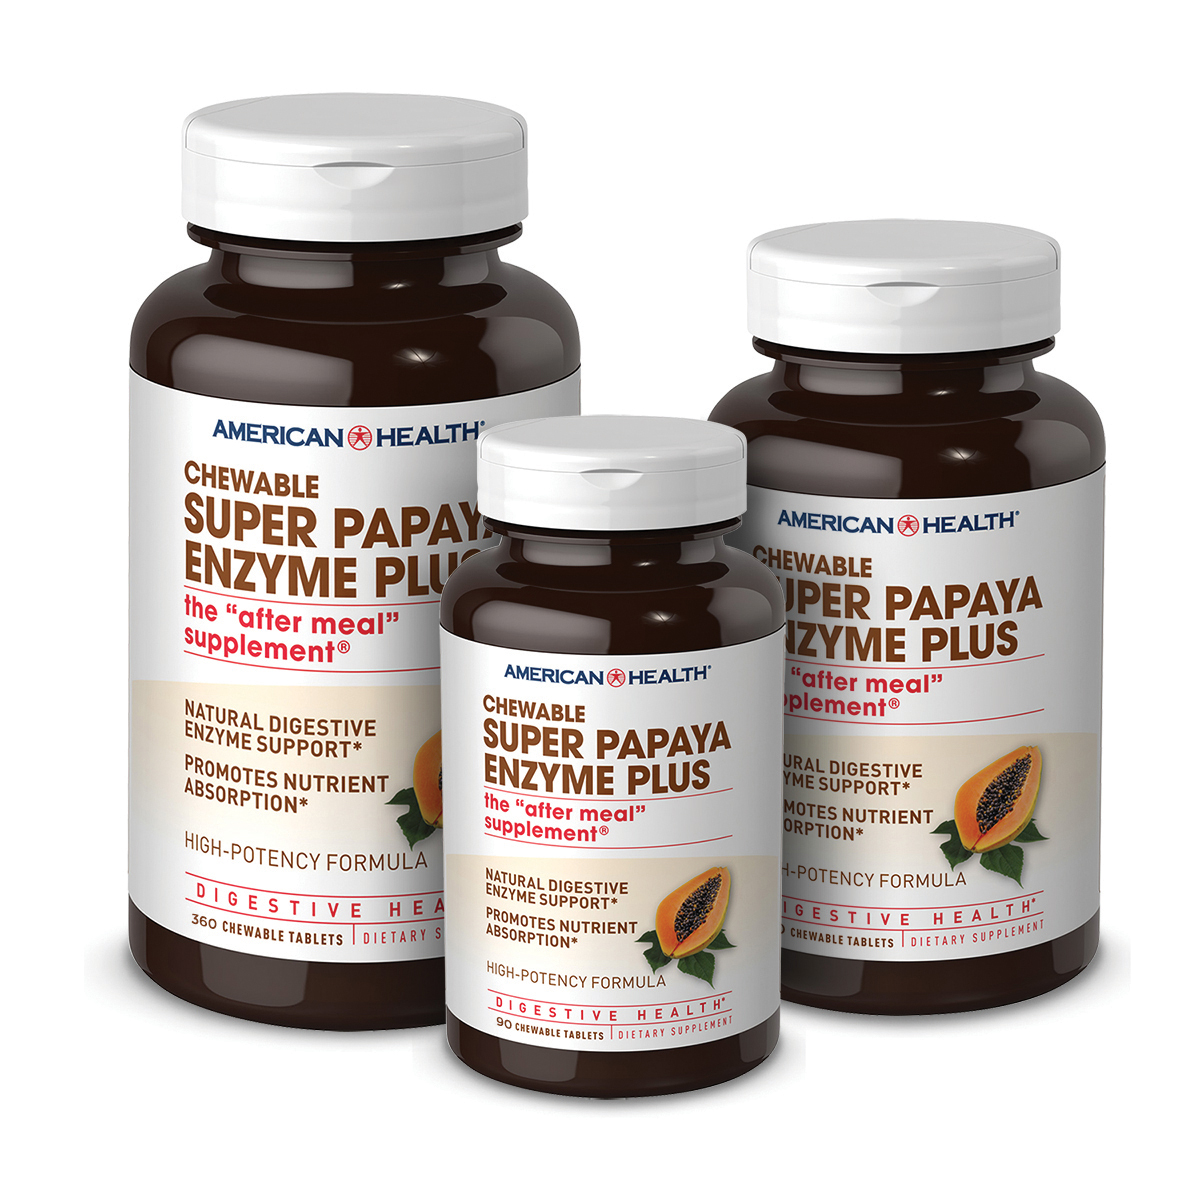 Chewable Super Papaya Enzyme Plus by American Health